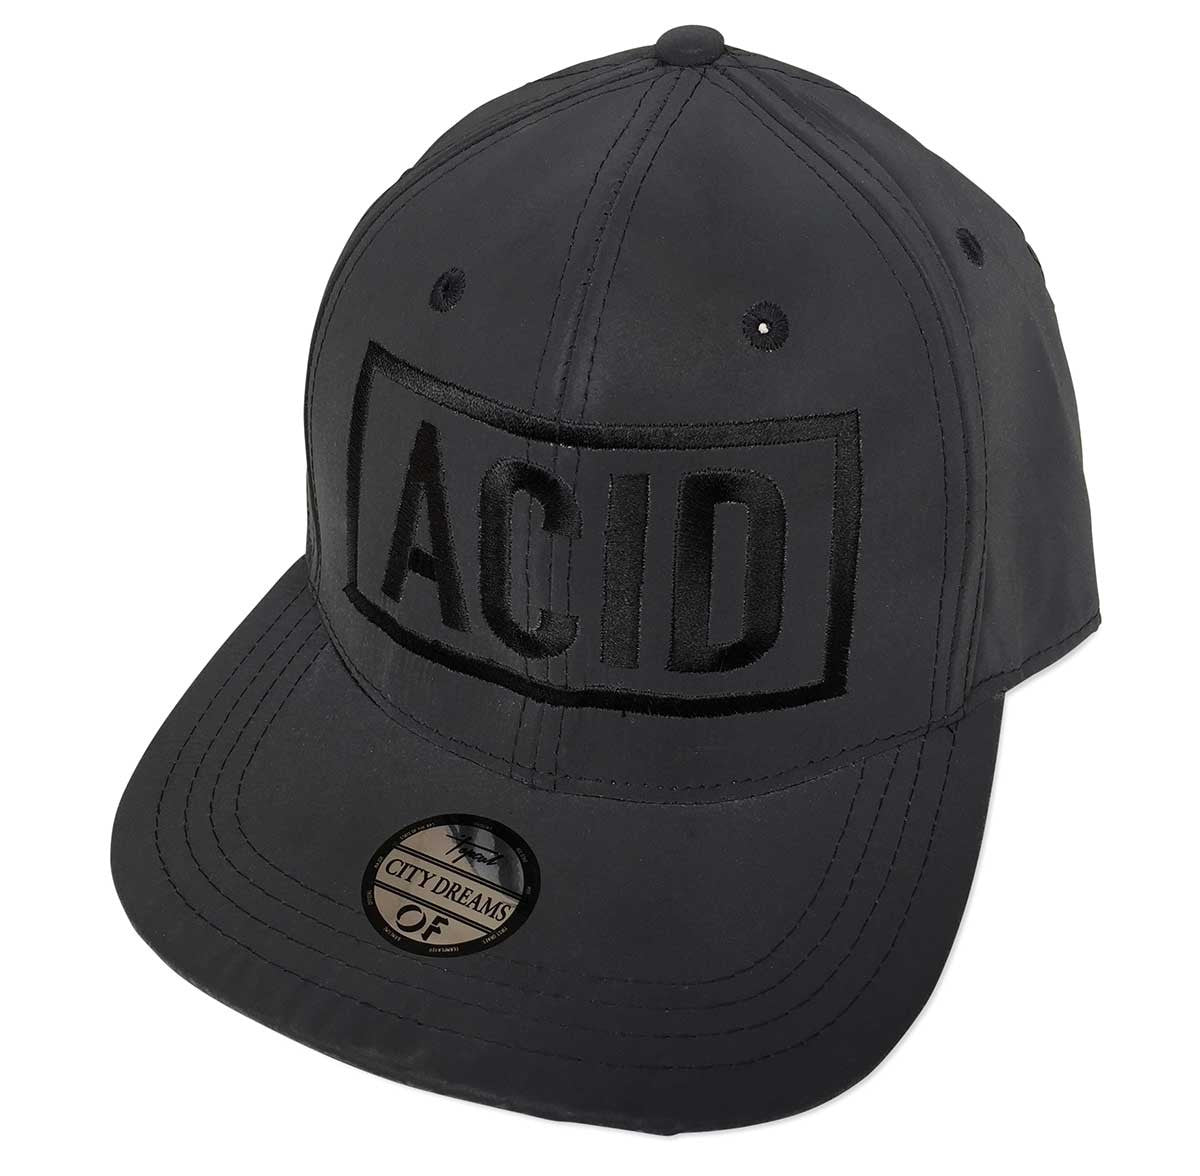 ACID Hat. Dark Grey Limited Edition 3d Embroidered Retroreflective Cap